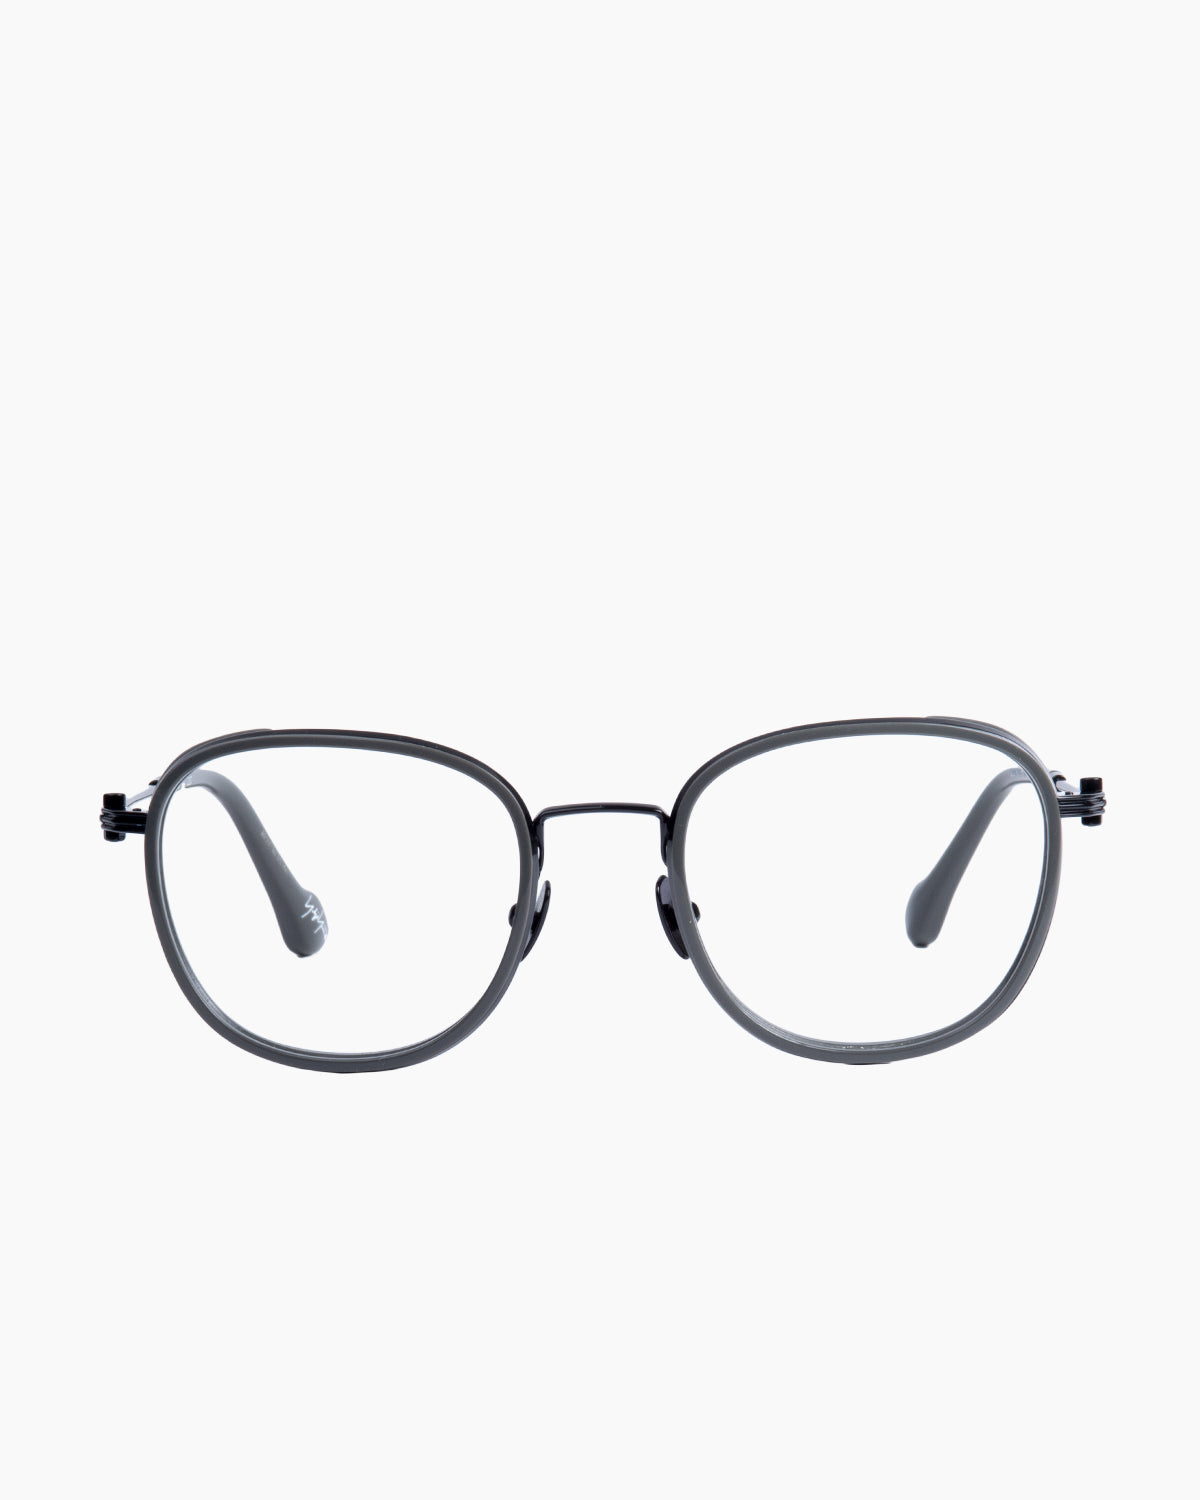 Yohji Yamamoto - Look005 - 002 | glasses bar:  Marie-Sophie Dion